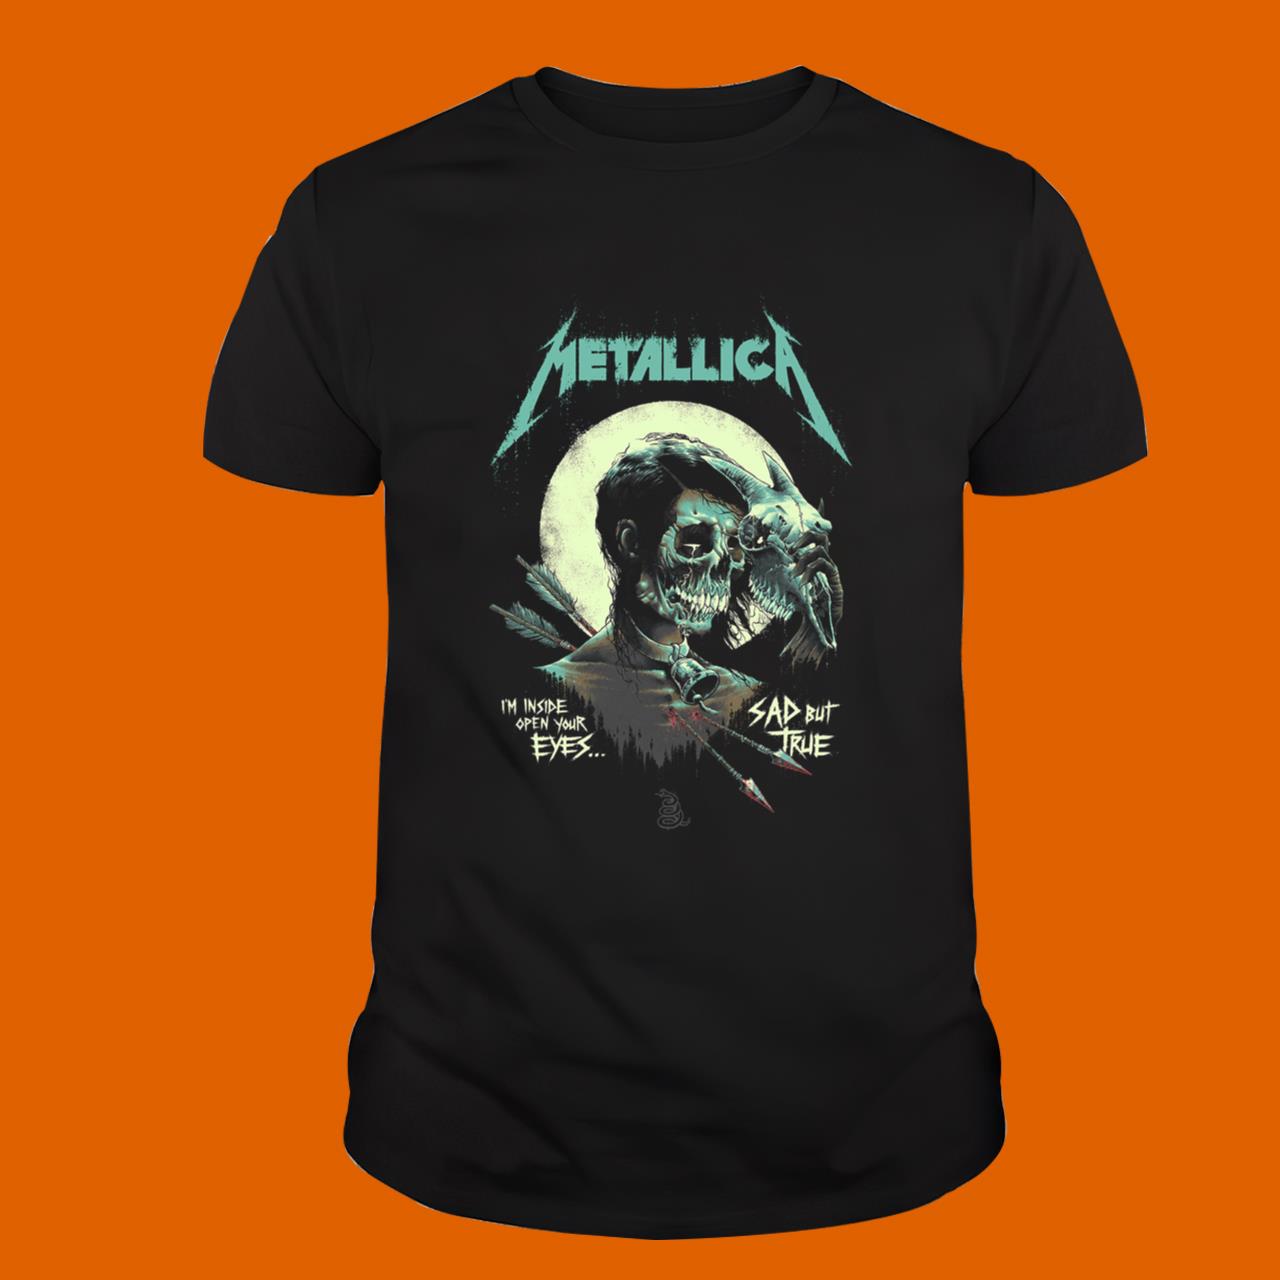 Metallica I am Inside Open Your Eye Sad But True Shirt